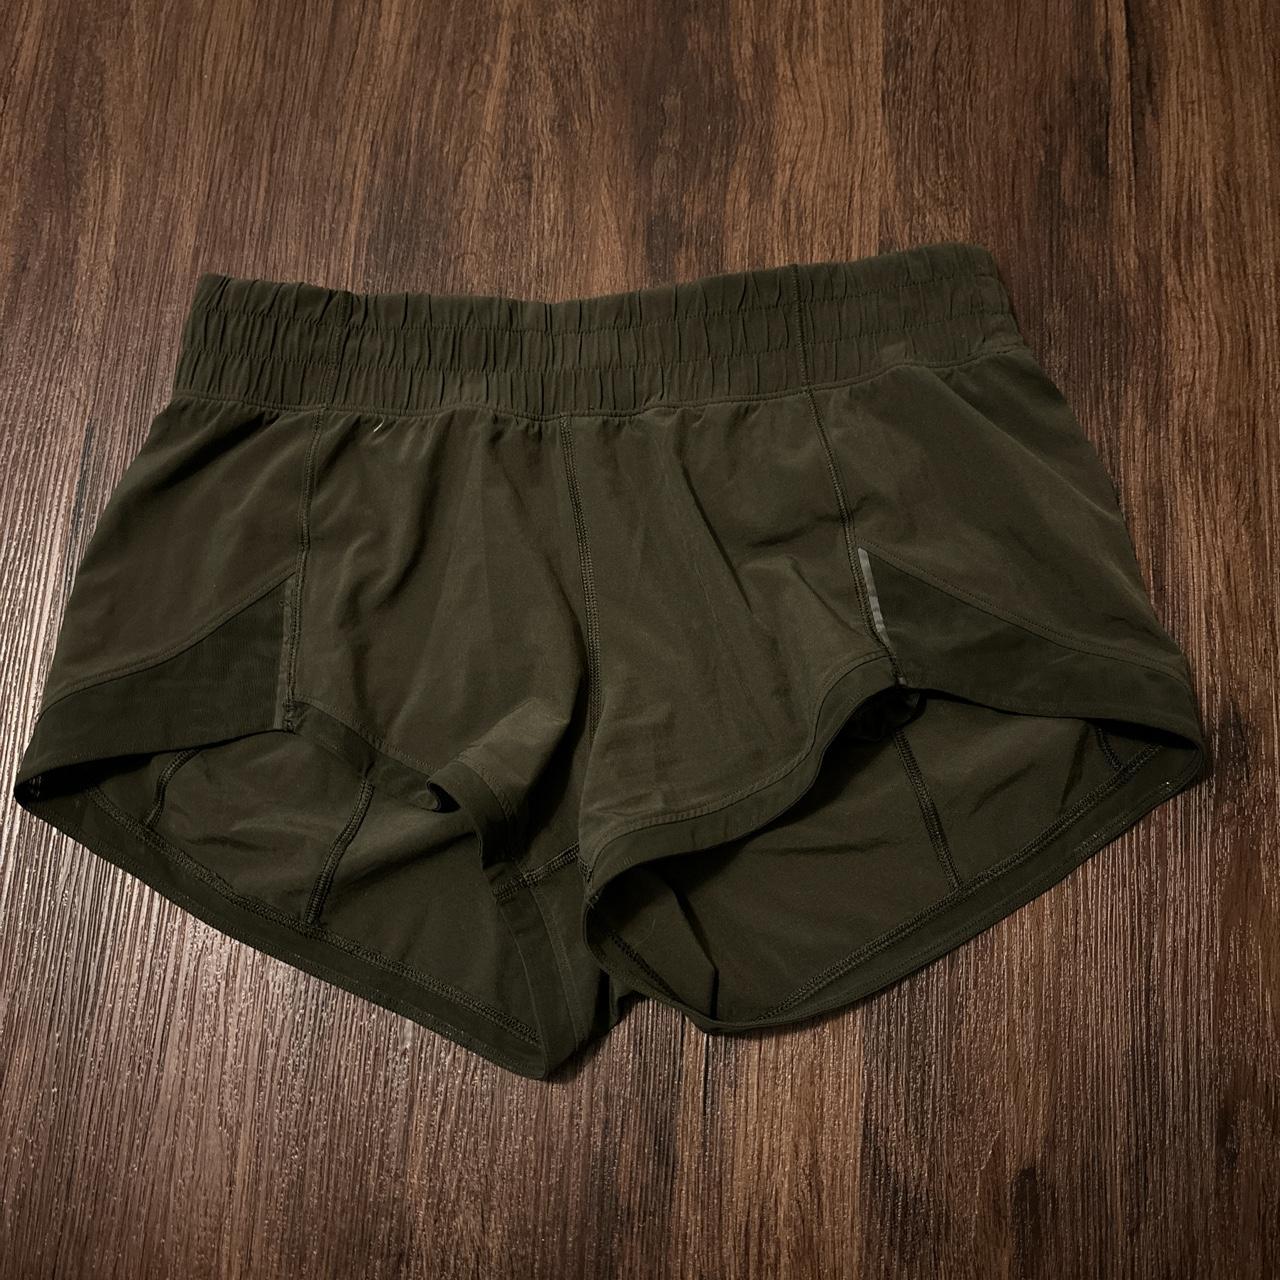 Gorgeous Lululemon shorts in a size 6! - Depop